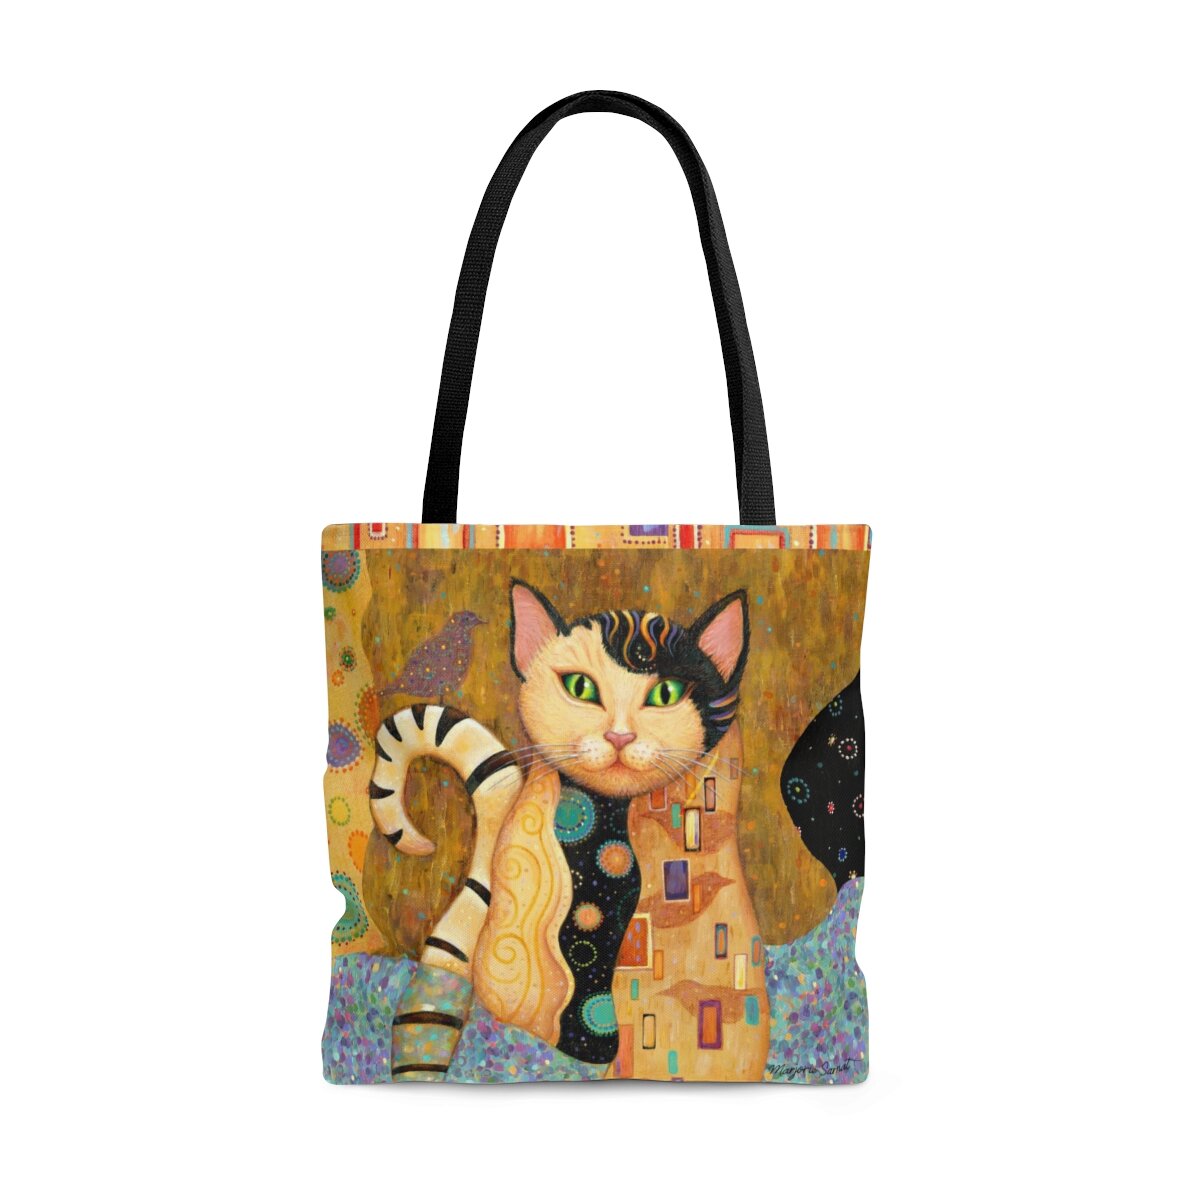 Kleo Kats, “Audubon” Tote Bag, Klimt Style Cat Fashion Accessory by ...